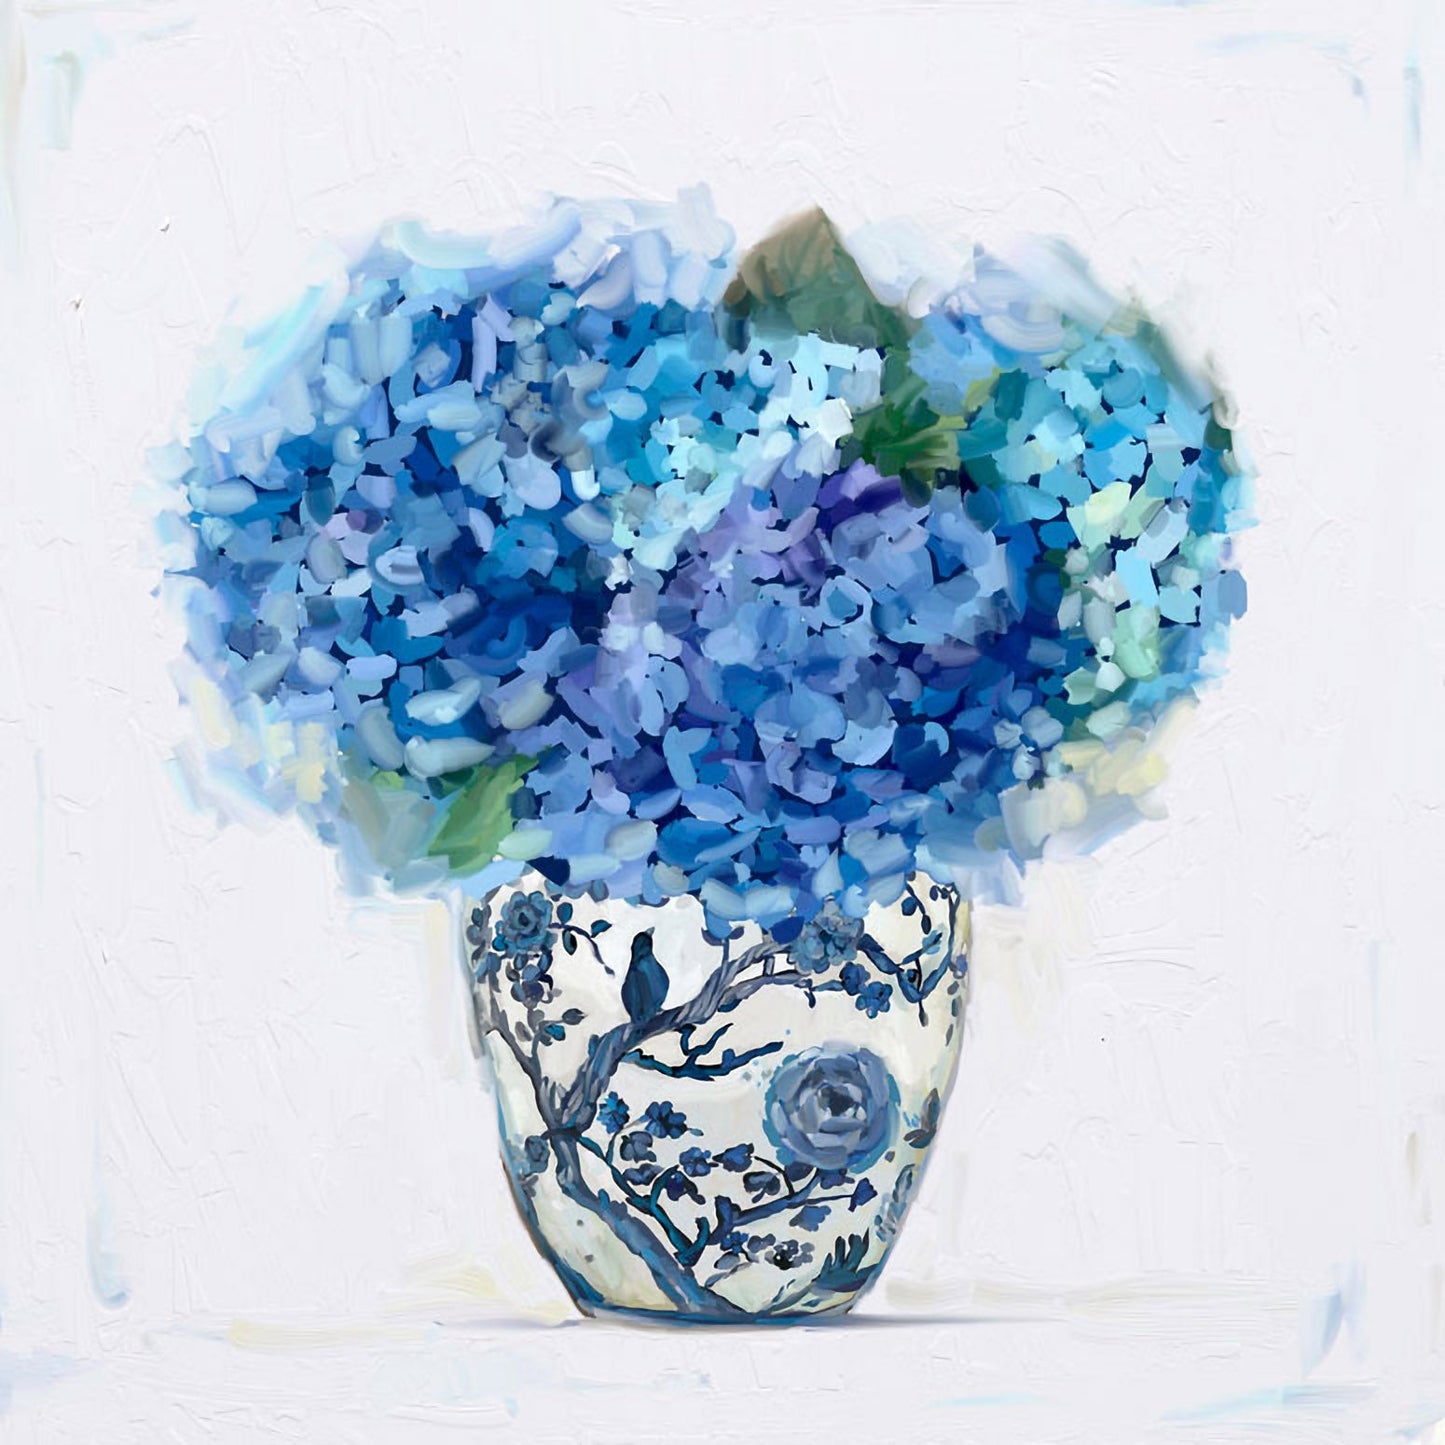 Dreaming In Blue - Hydrangeas Canvas Wall Art